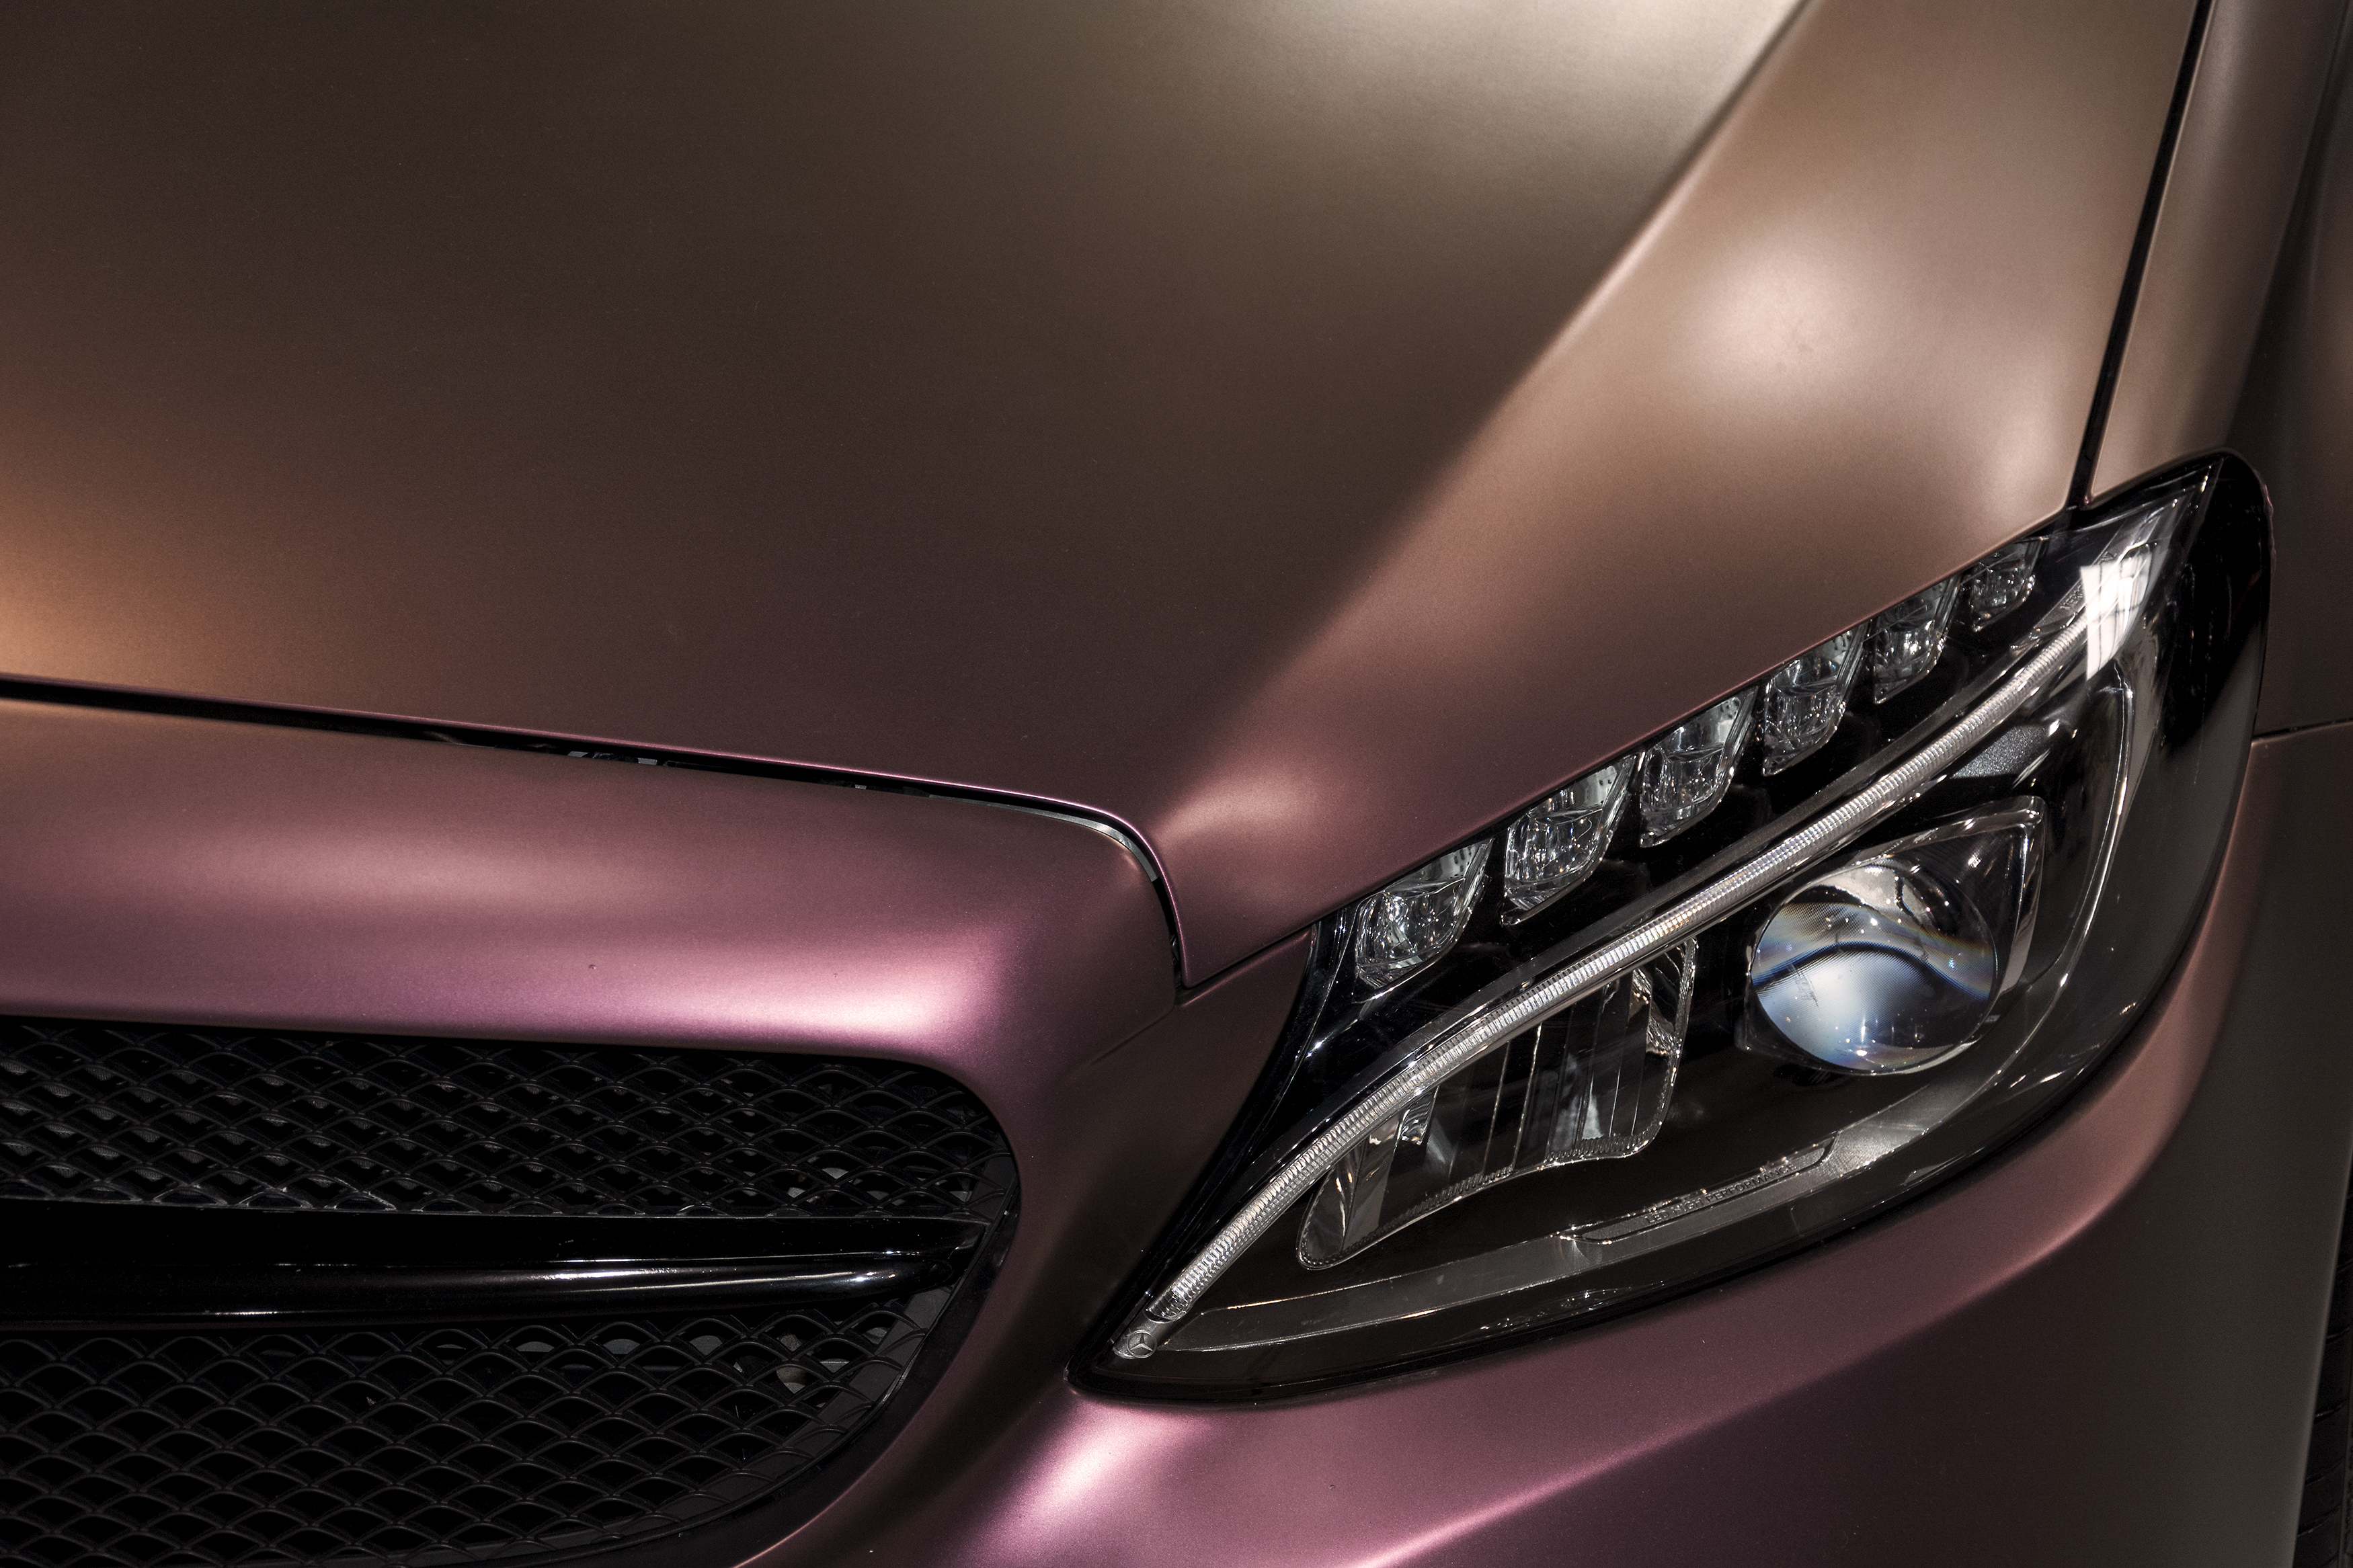 Free Image: Luxury Pink Car Close-Up | Libreshot Public Domain Photos